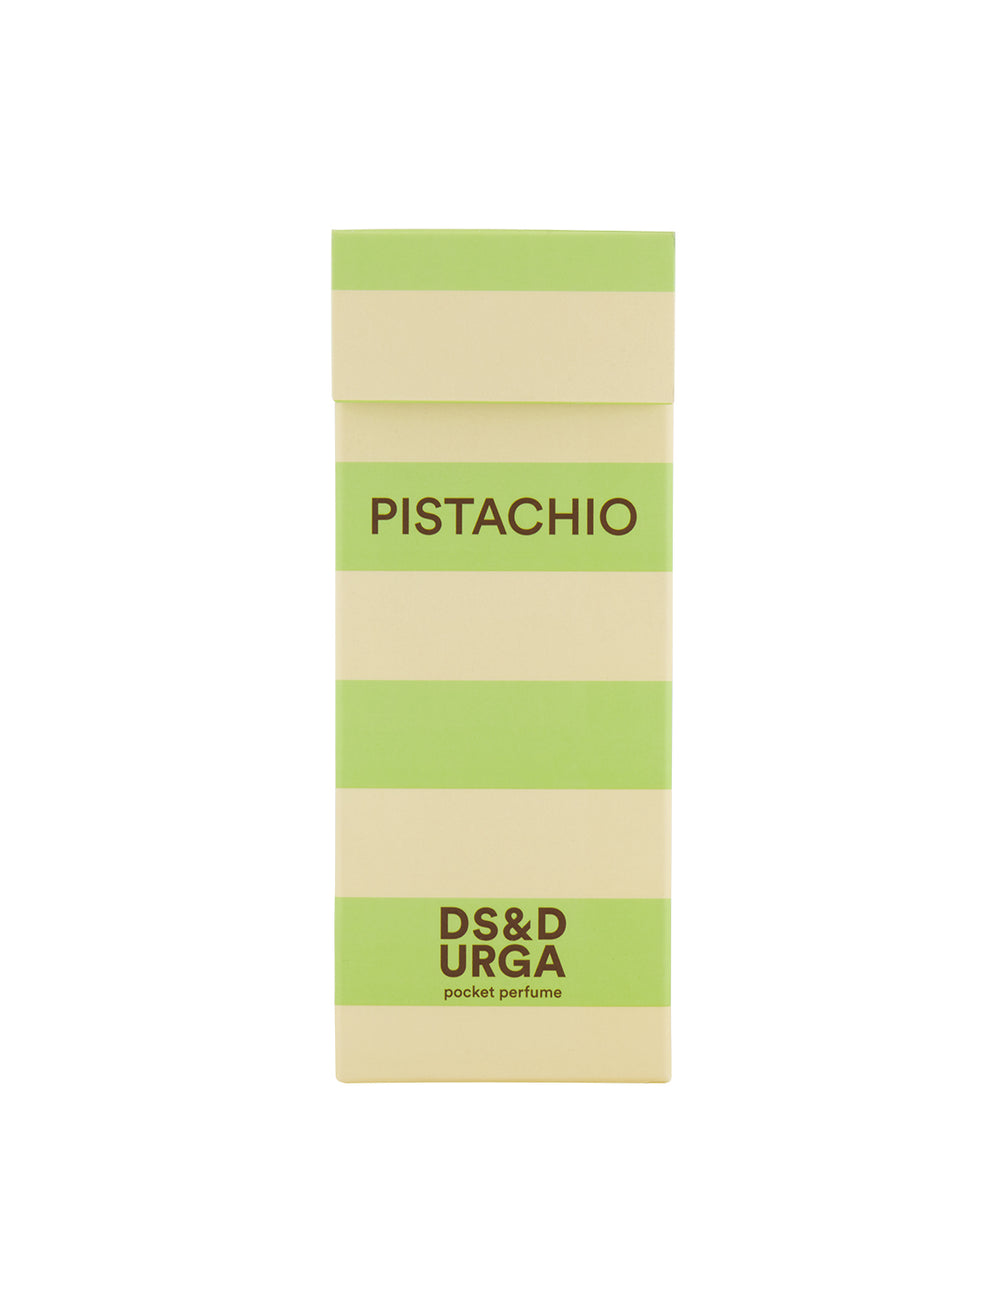 Packaging of D.S. & Durga's pistachio pocket perfume